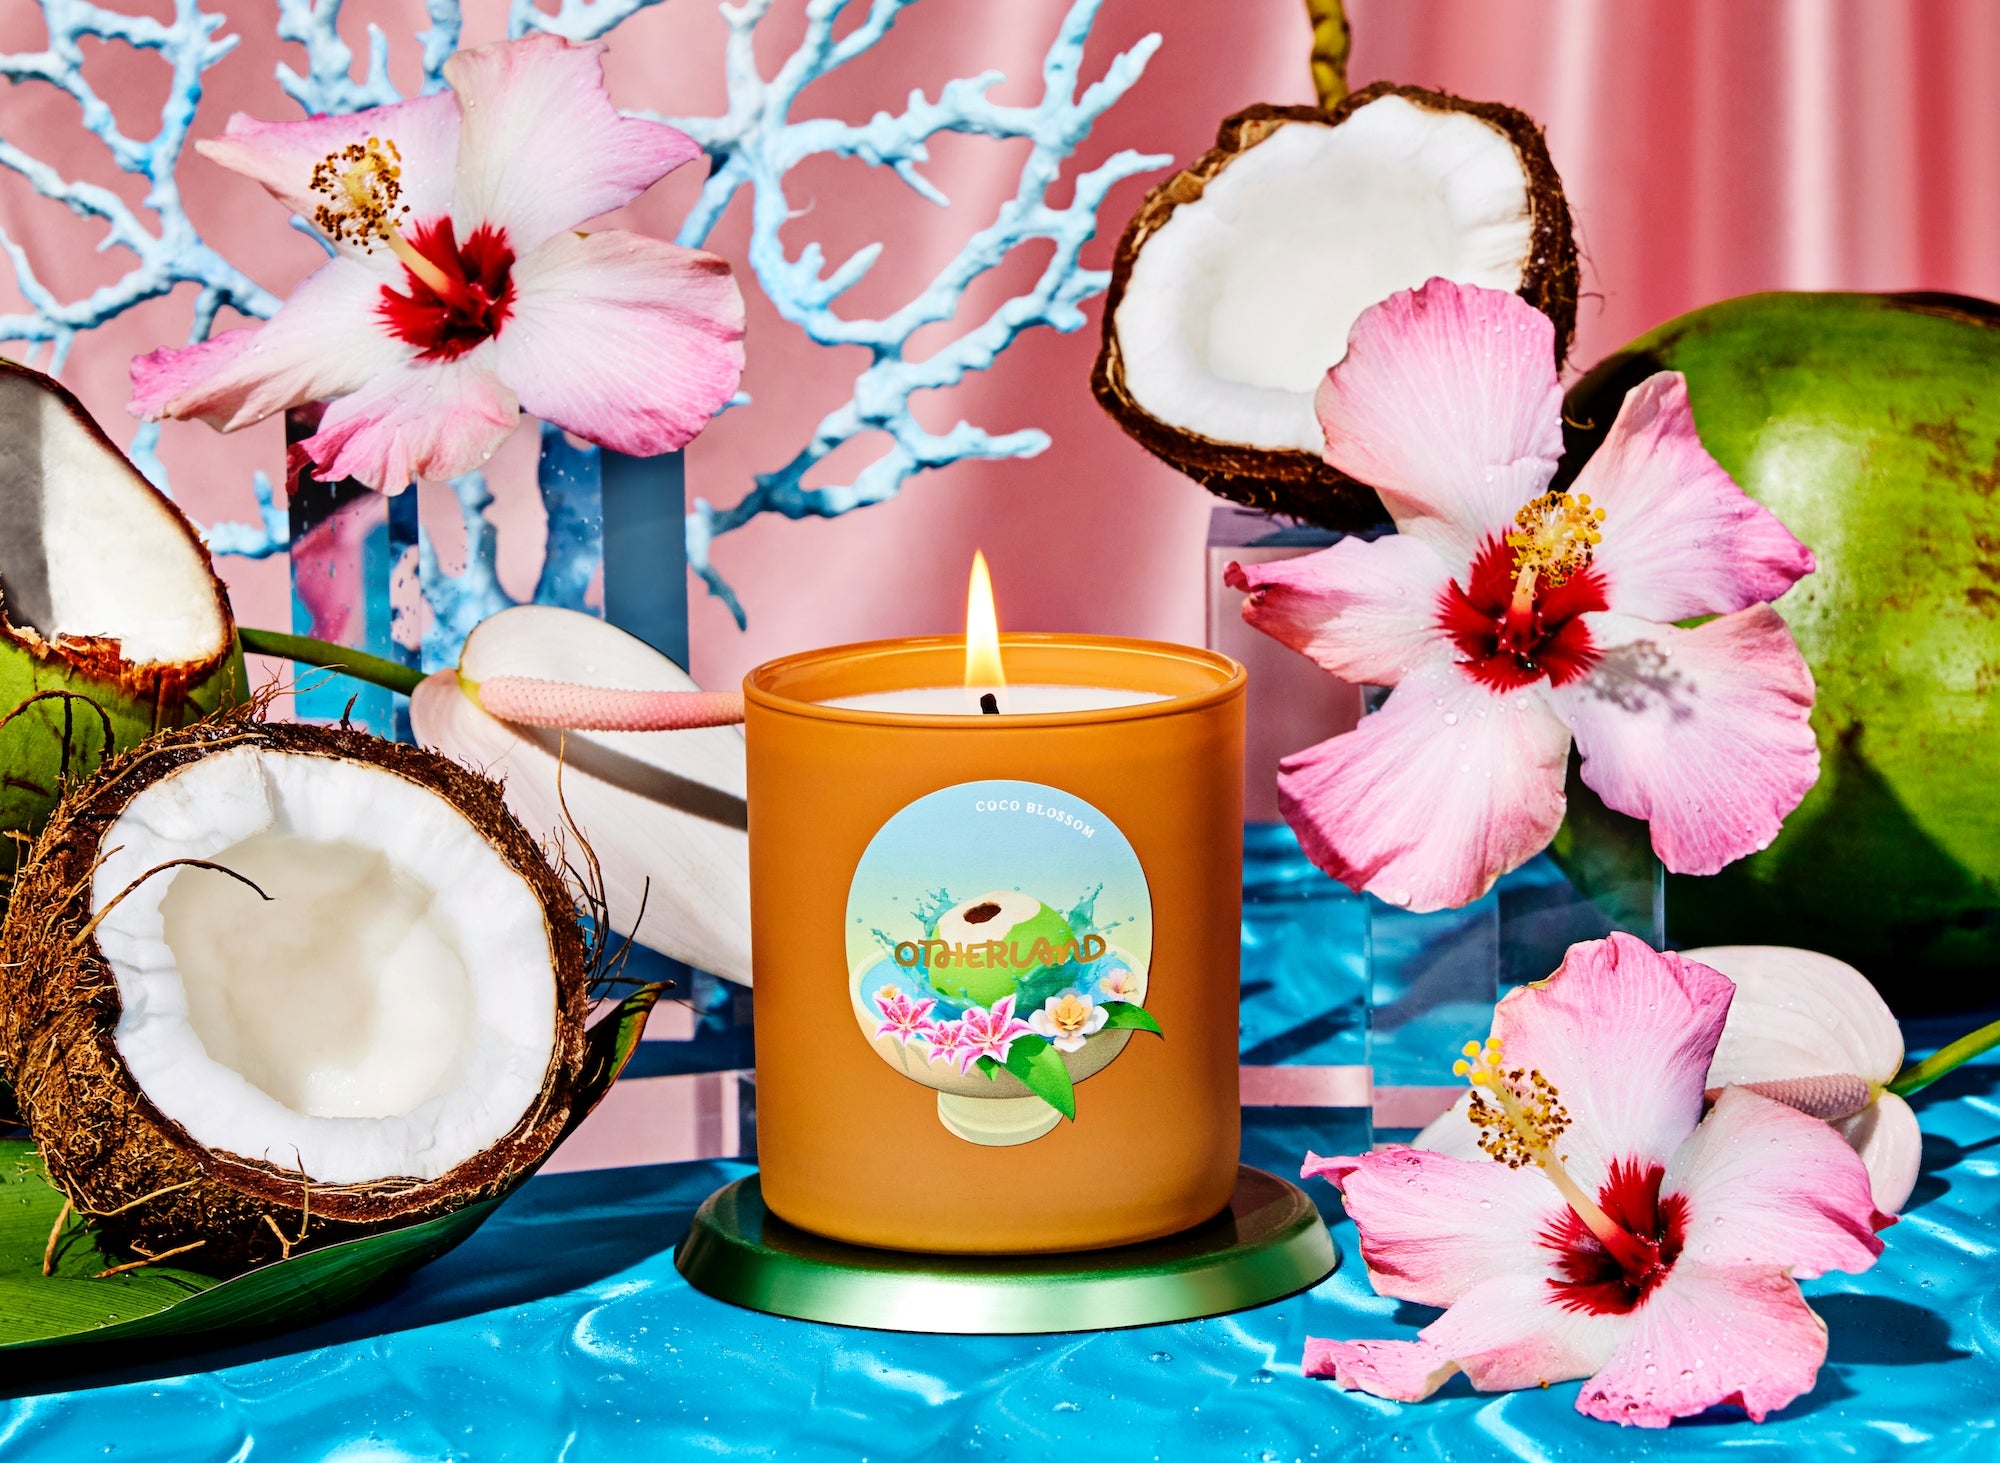 Coco Blossom Candle